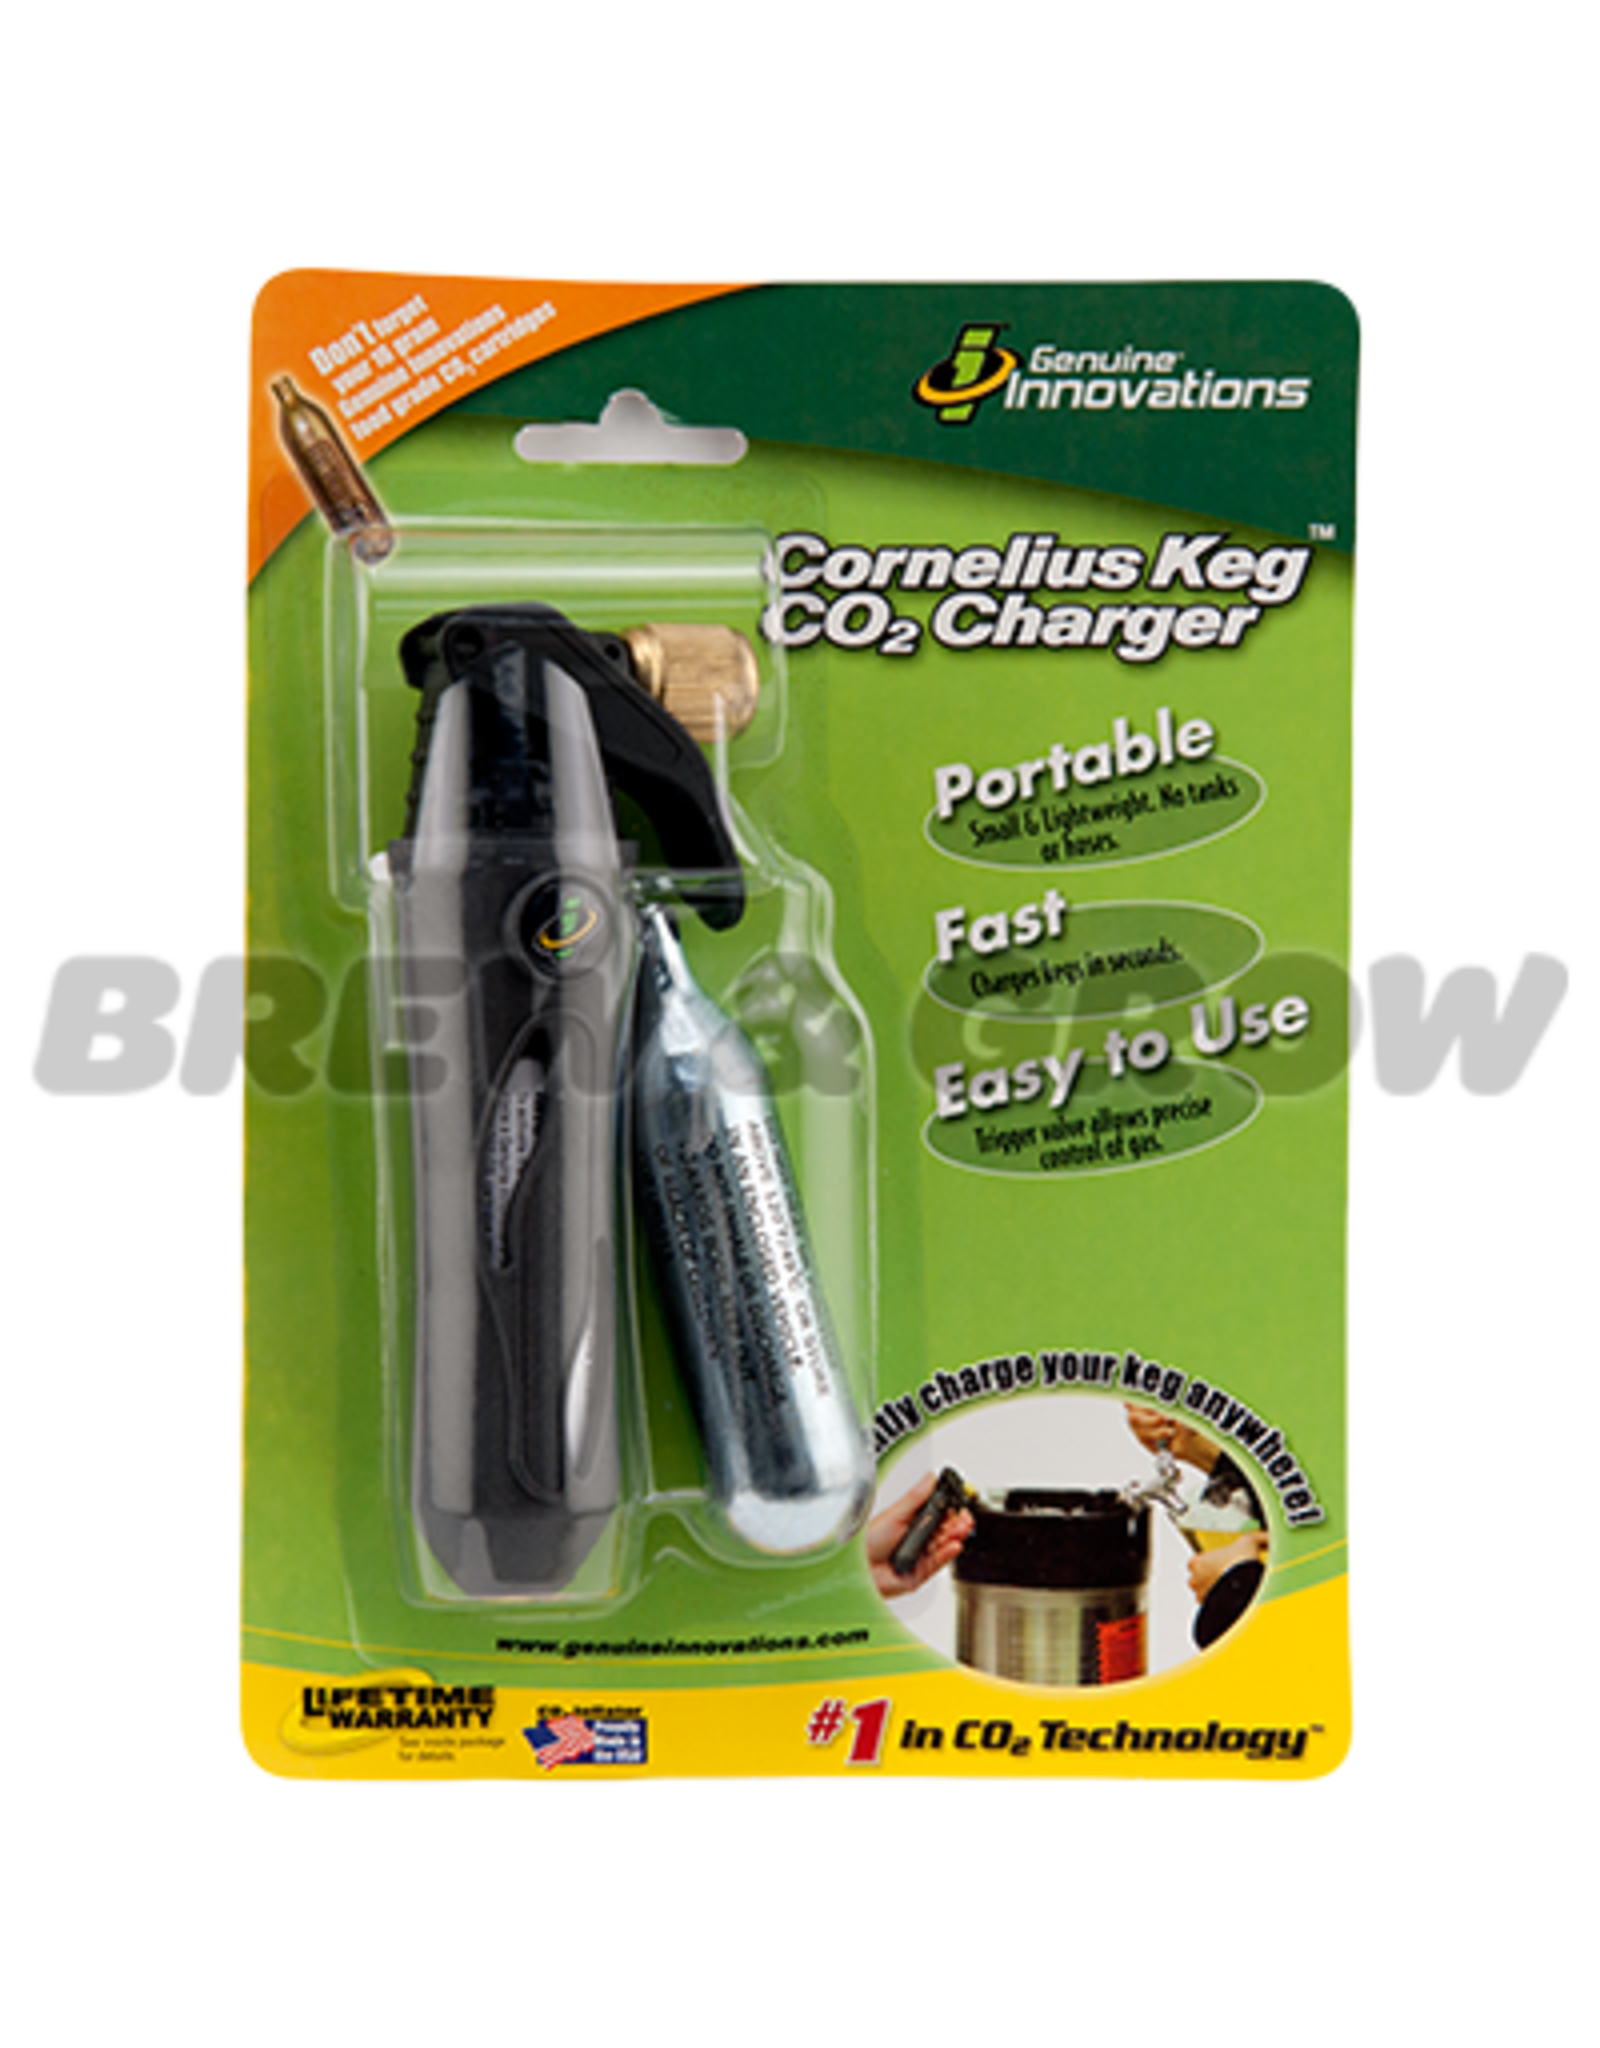 Portable CO2 Charger Cornelius Keg